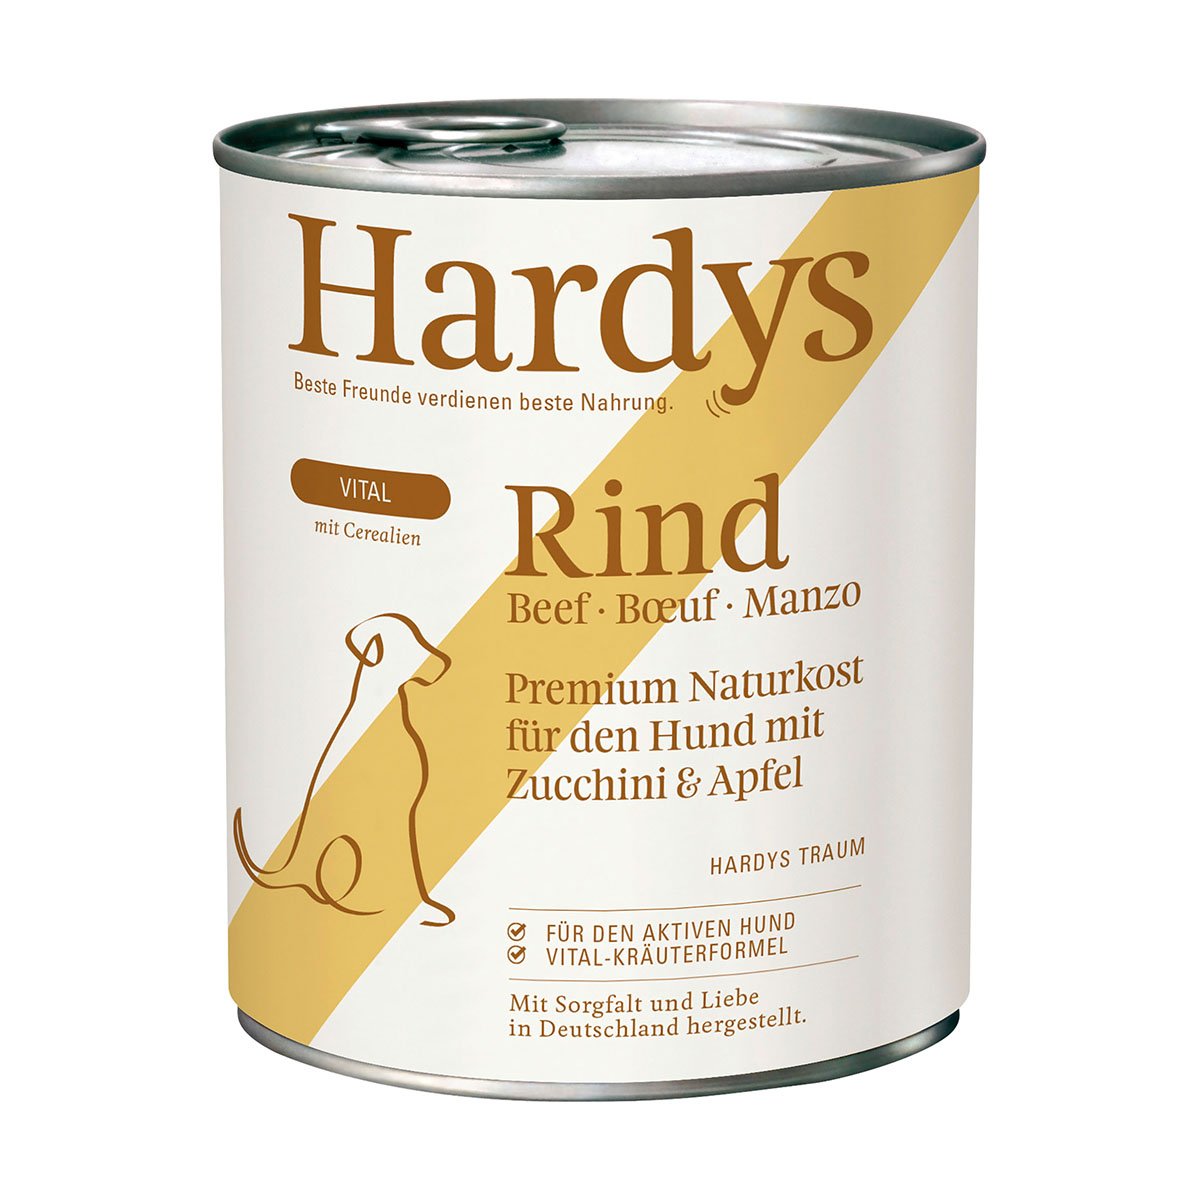 Hardys VITAL Rind mit Zucchini & Apfel 6x800g von Hardys